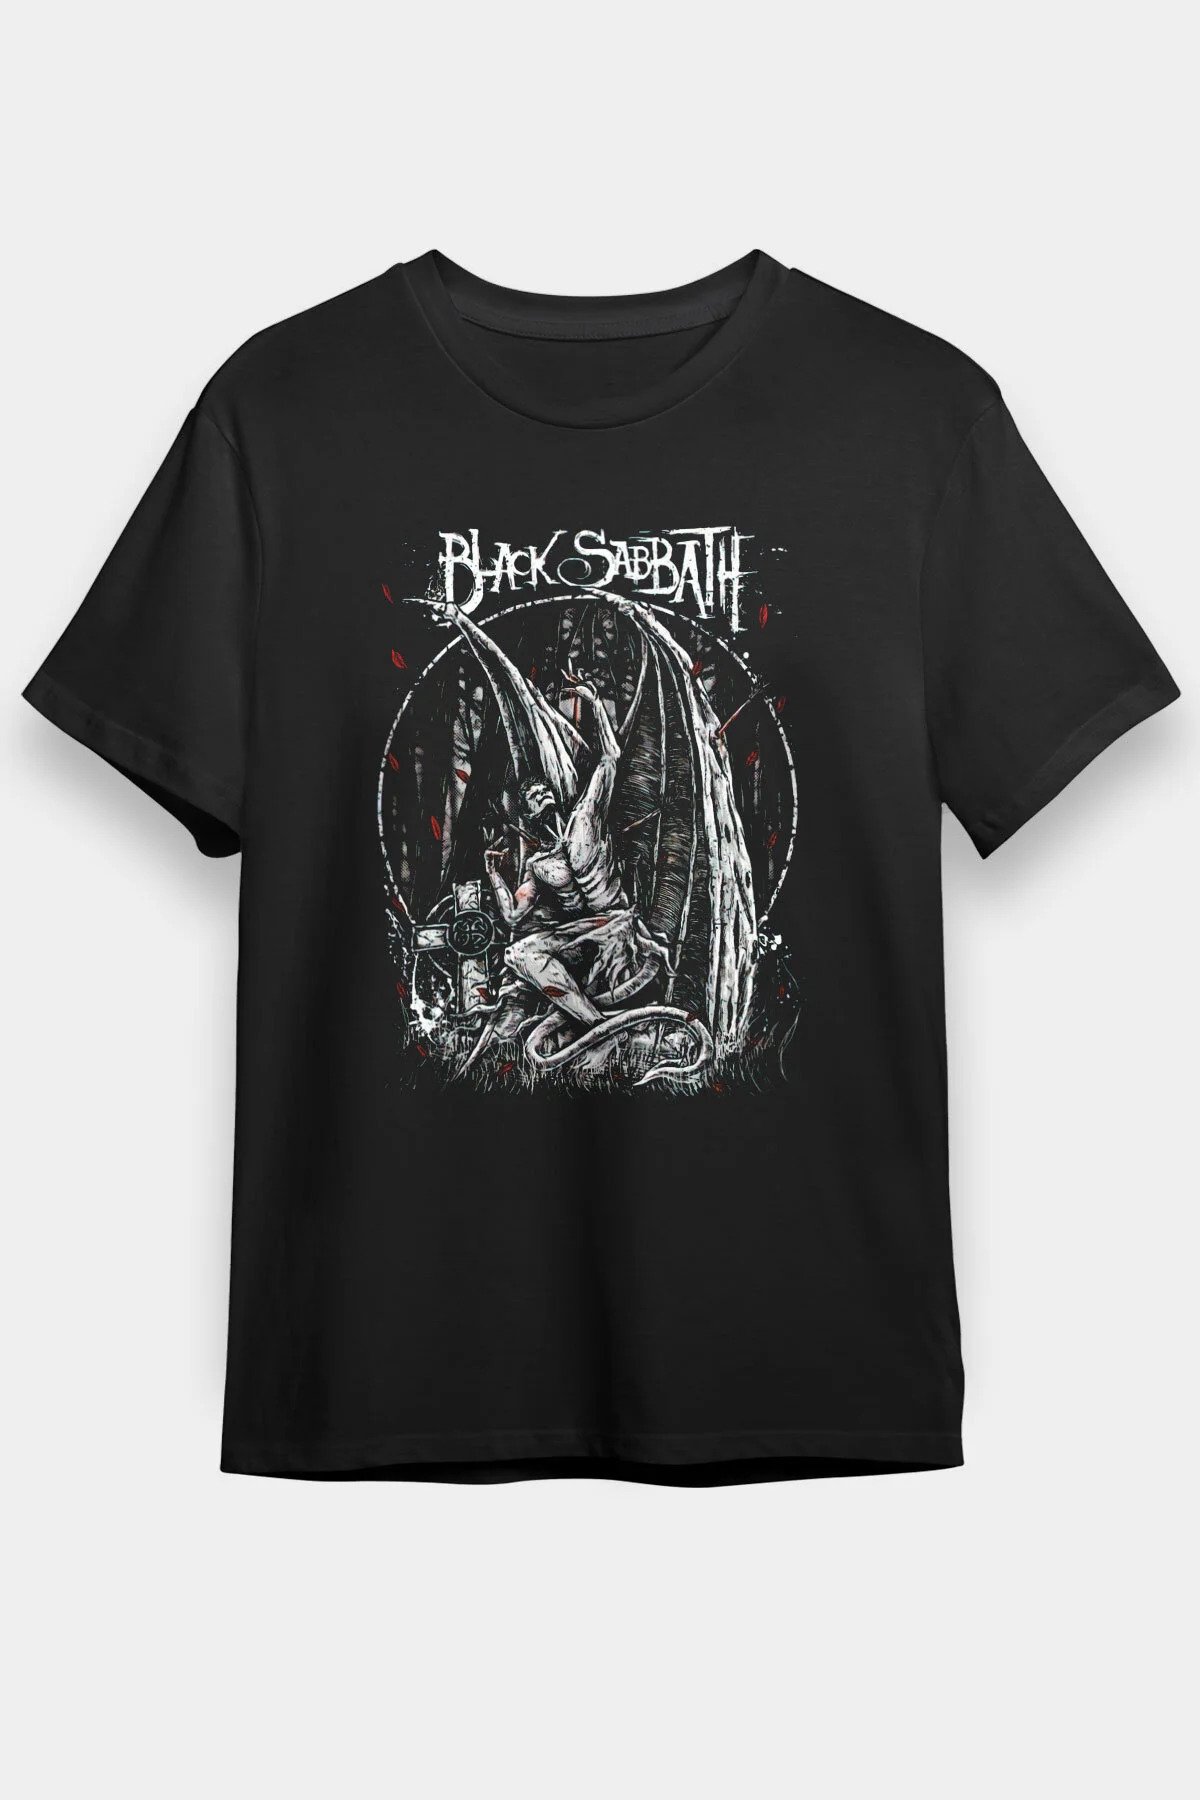 Black Sabbath ,Rock Music Band ,Unisex Tshirt 53/